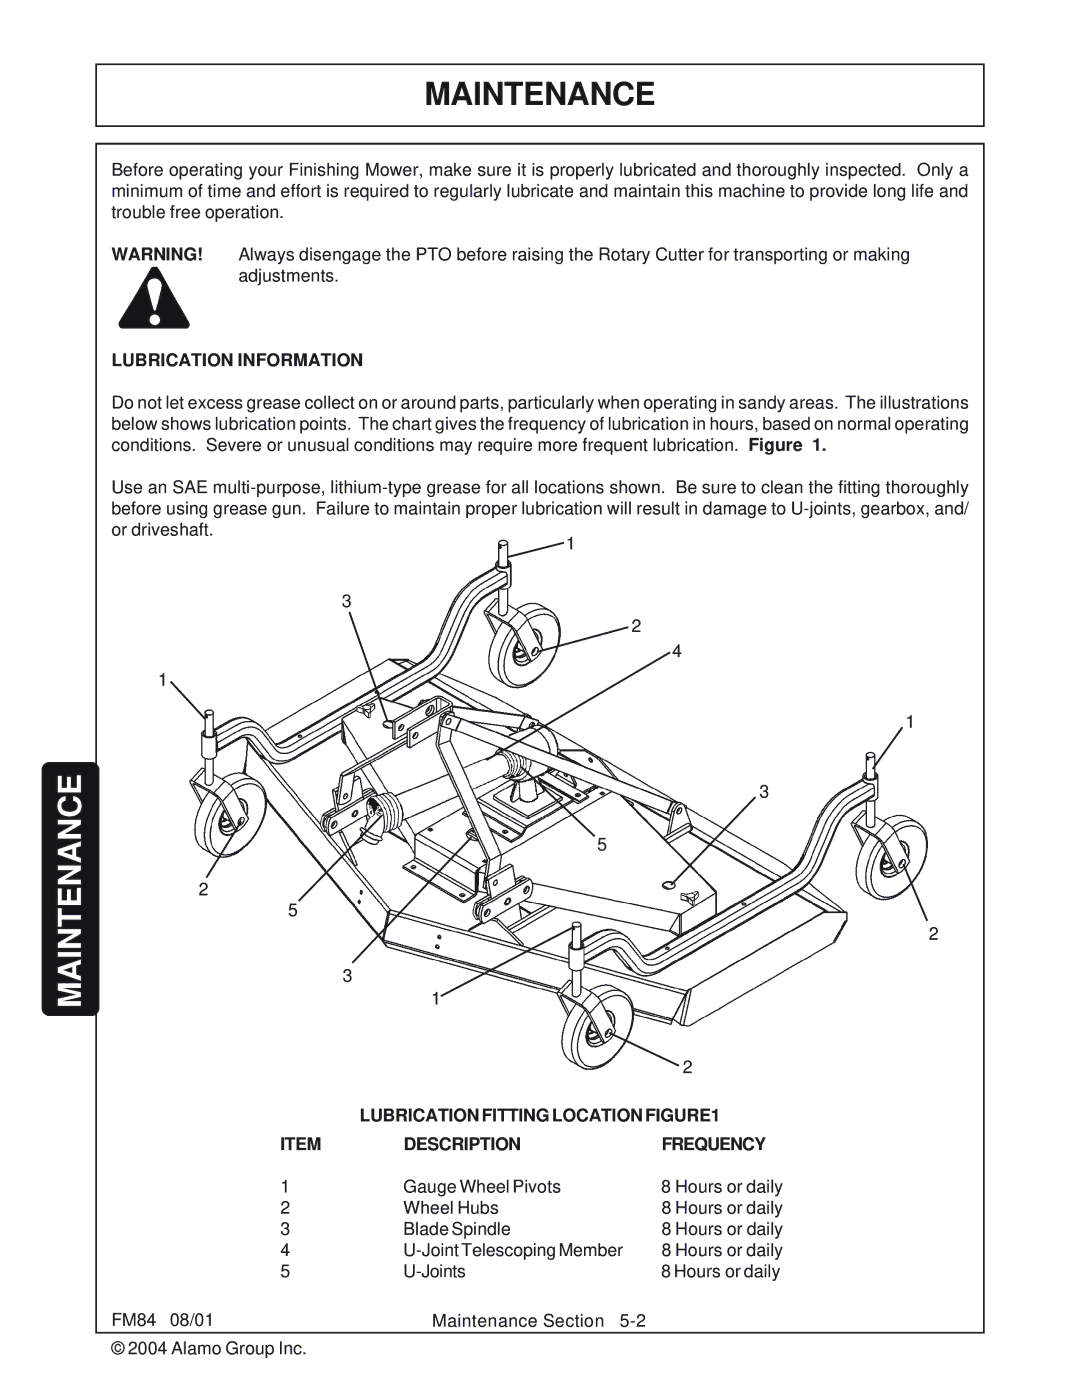 Servis-Rhino FM84 manual Lubrication Information, Lubrication Fitting Location, Description Frequency 